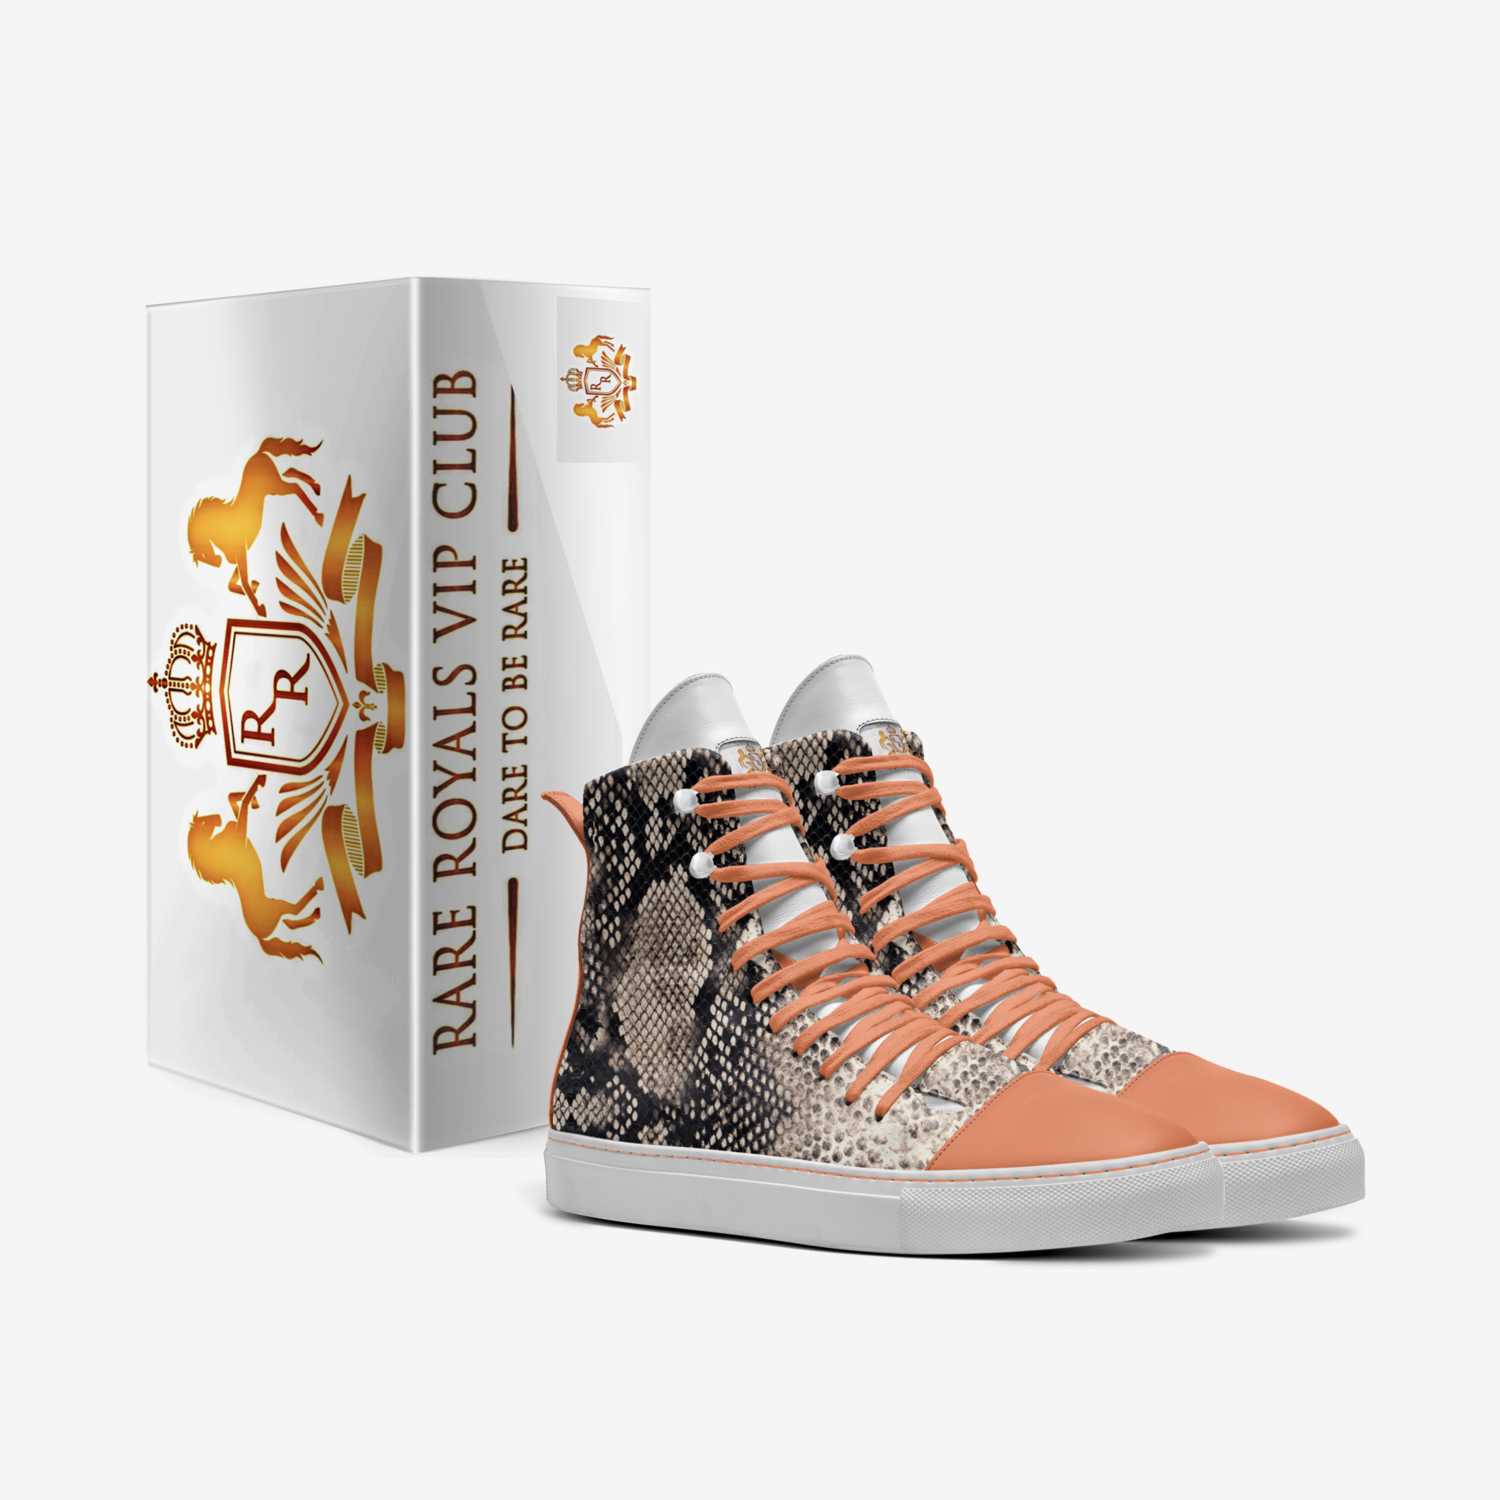 ECCENTRIC custom made in Italy shoes by John A. Annan Forson | Box view